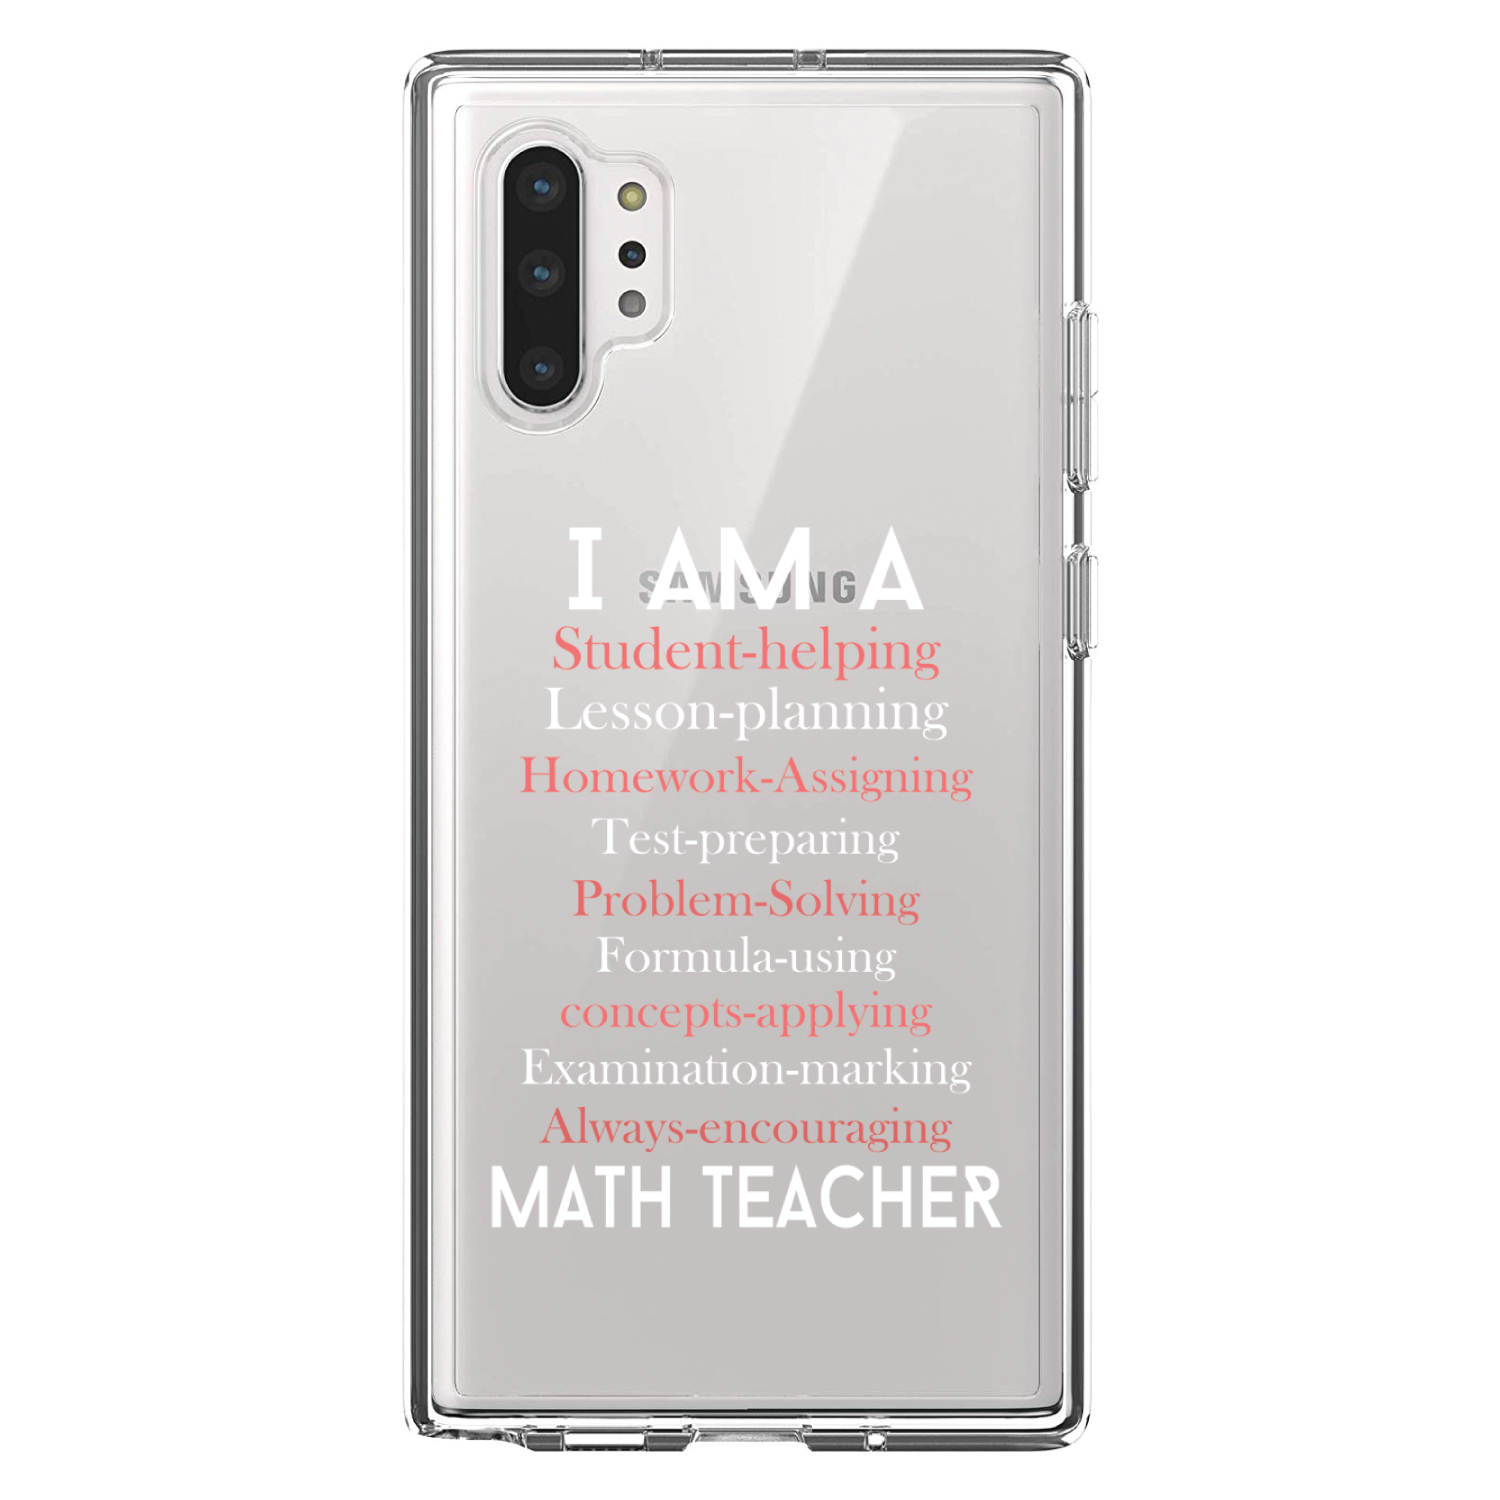 Math Exam - Samsung Galaxy S20 Ultra Case